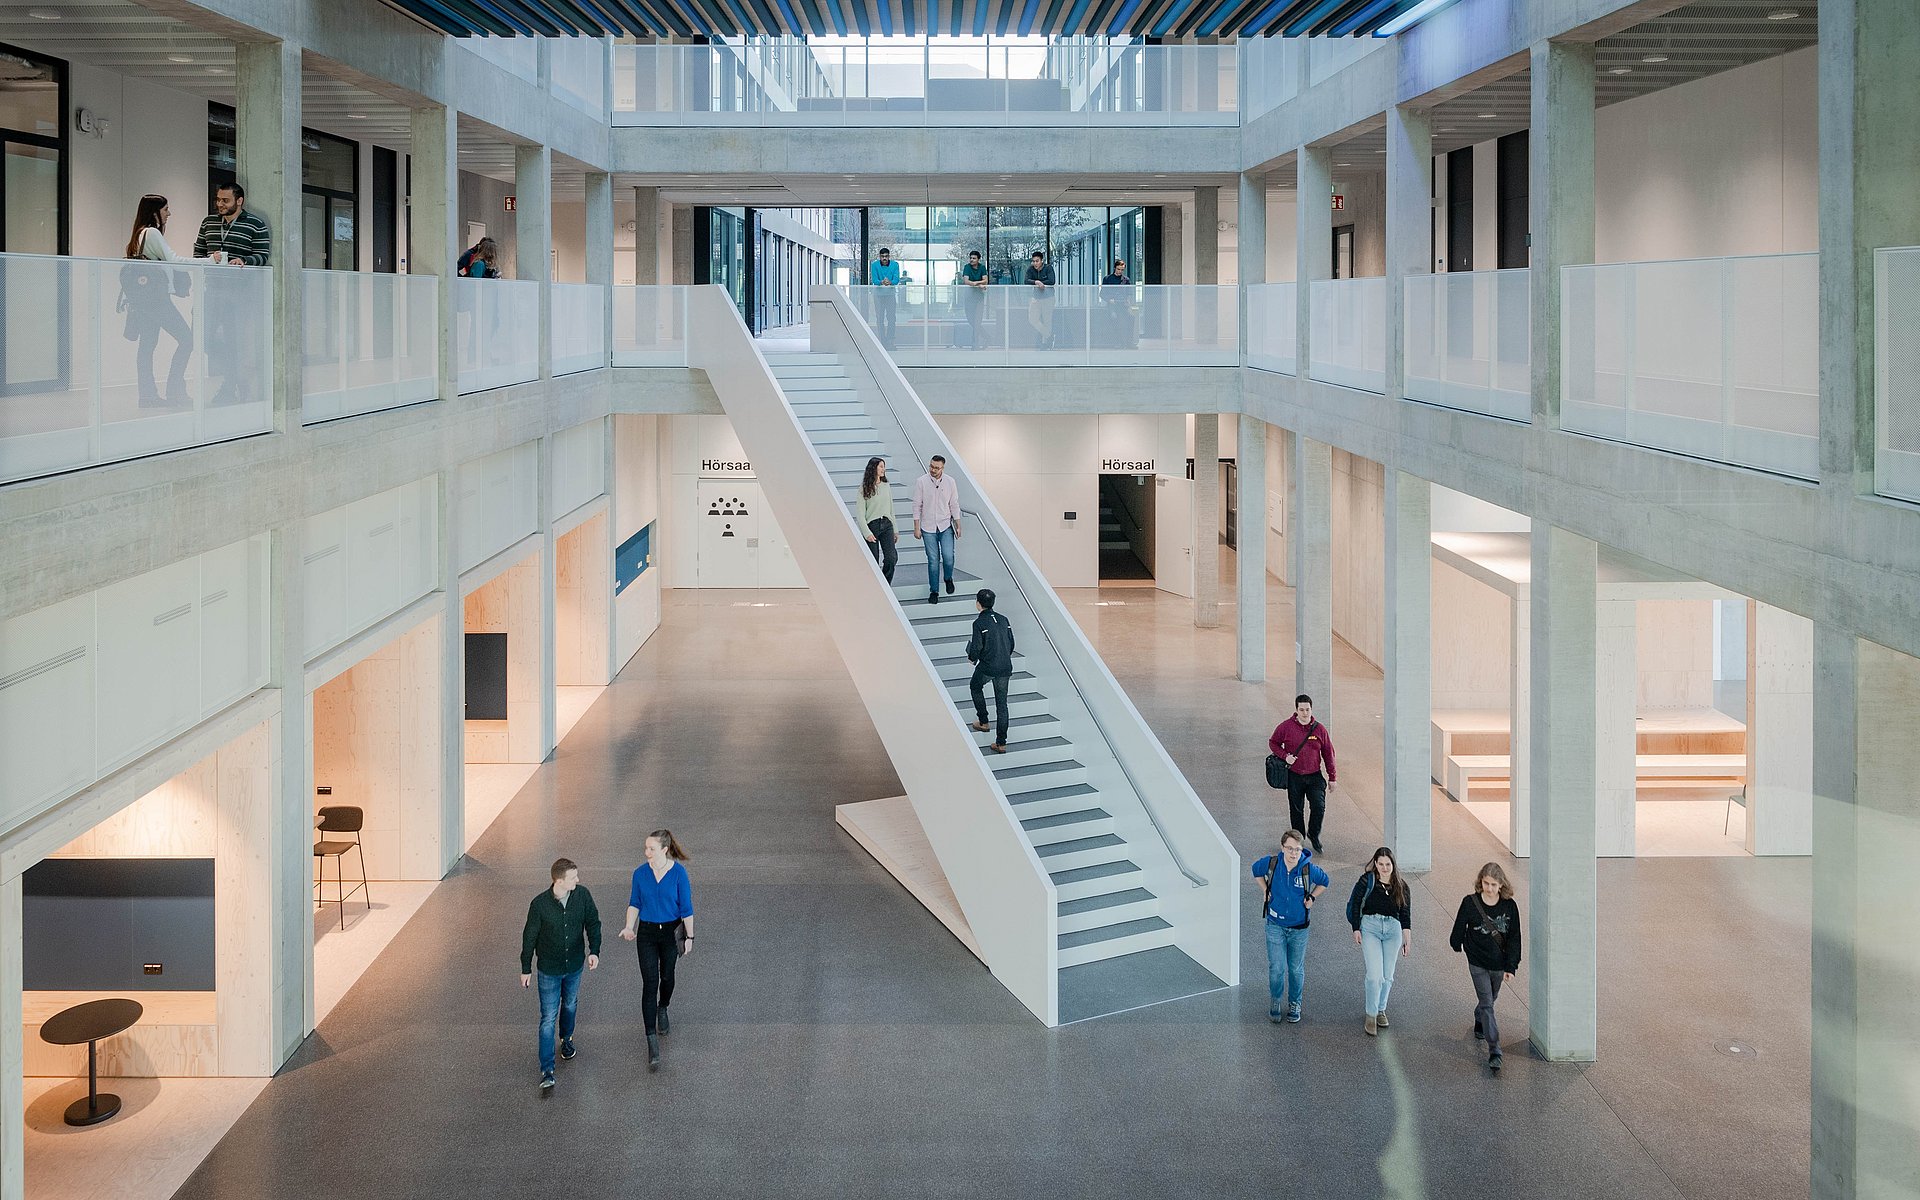 Technical University of Munich: The Entrepreneurial University - TUM